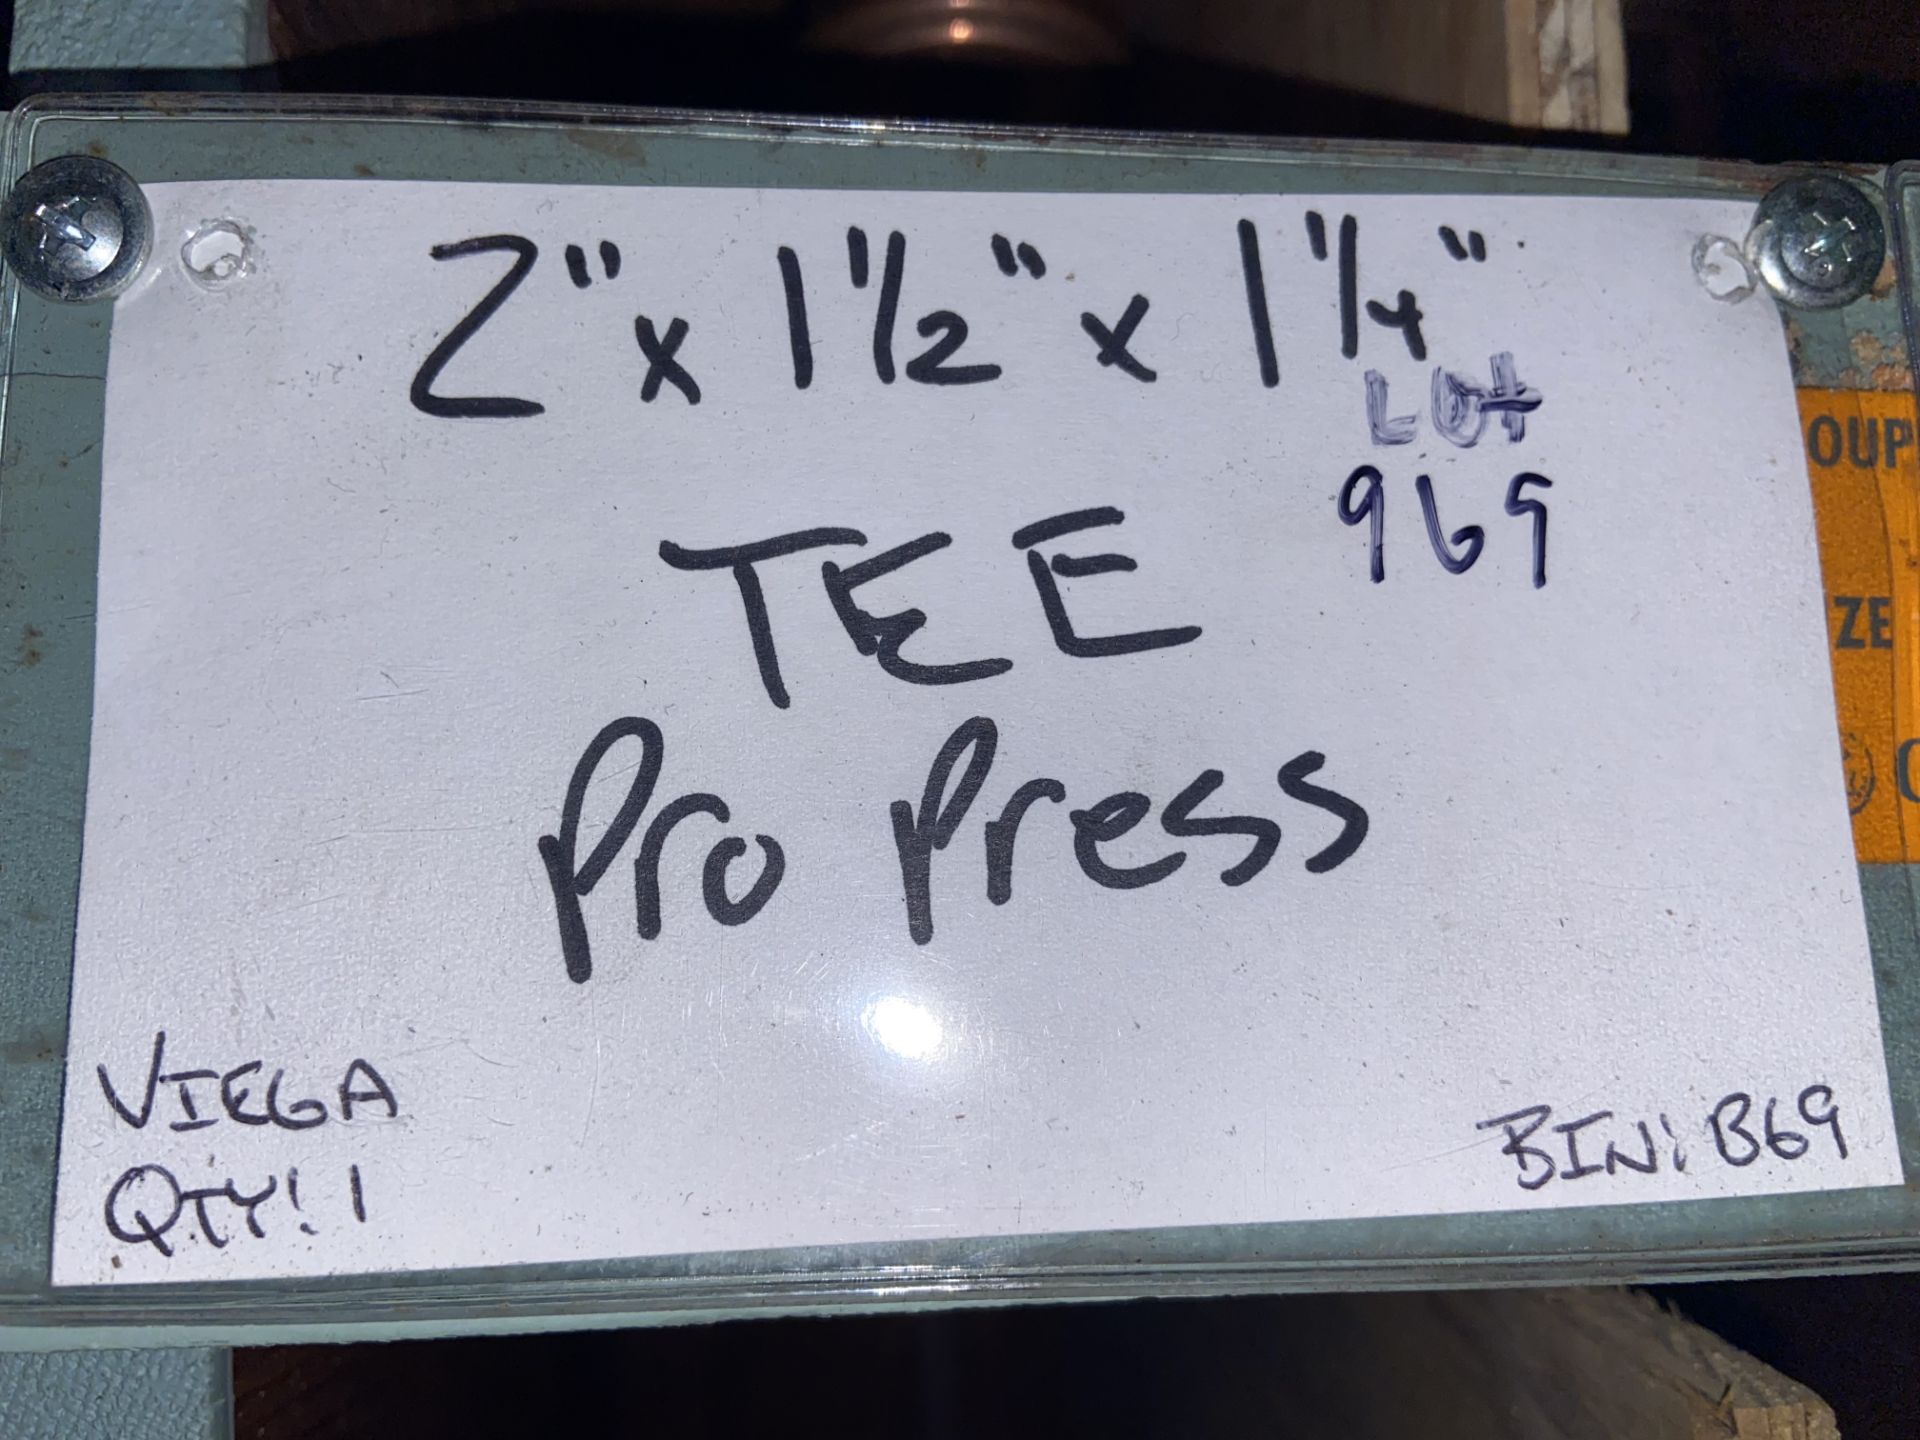 (1) VIEGA 2”x1 1/2” x 1 1/4” Tee Pro Press; (2) NIBCO 1 1/4” 1 1/4”x 1/2” Tee Pro Press; VIEGA (1) - Image 2 of 33